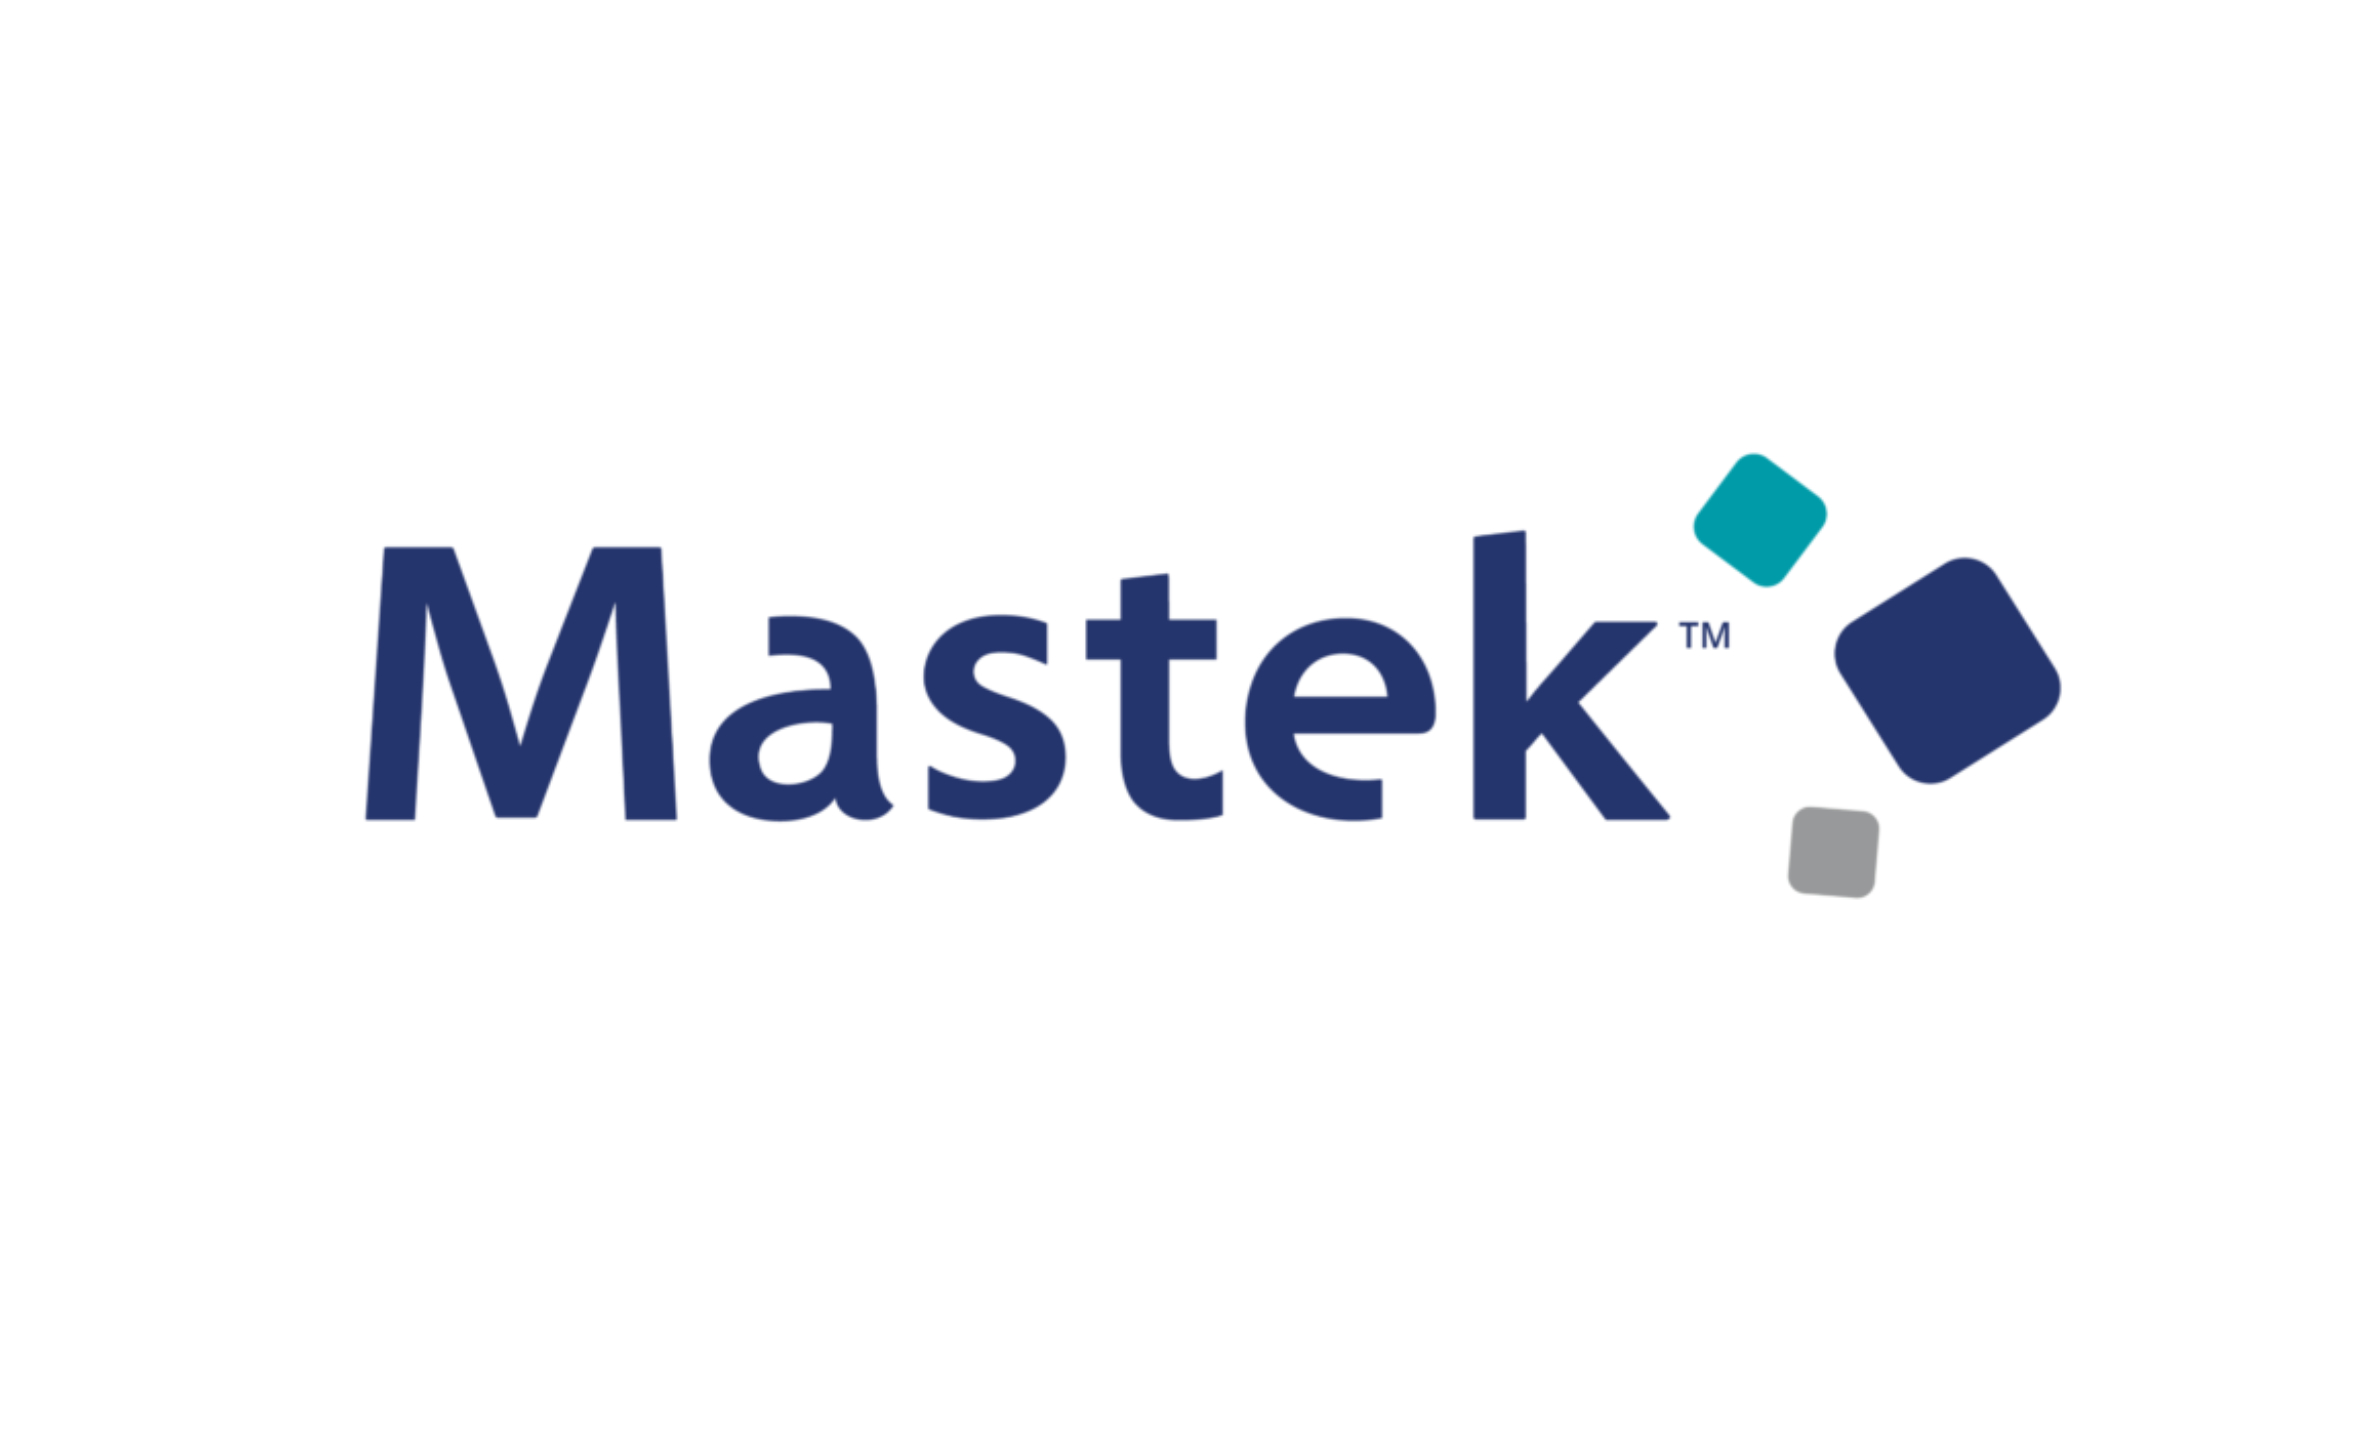 Mastek partners with commercetools